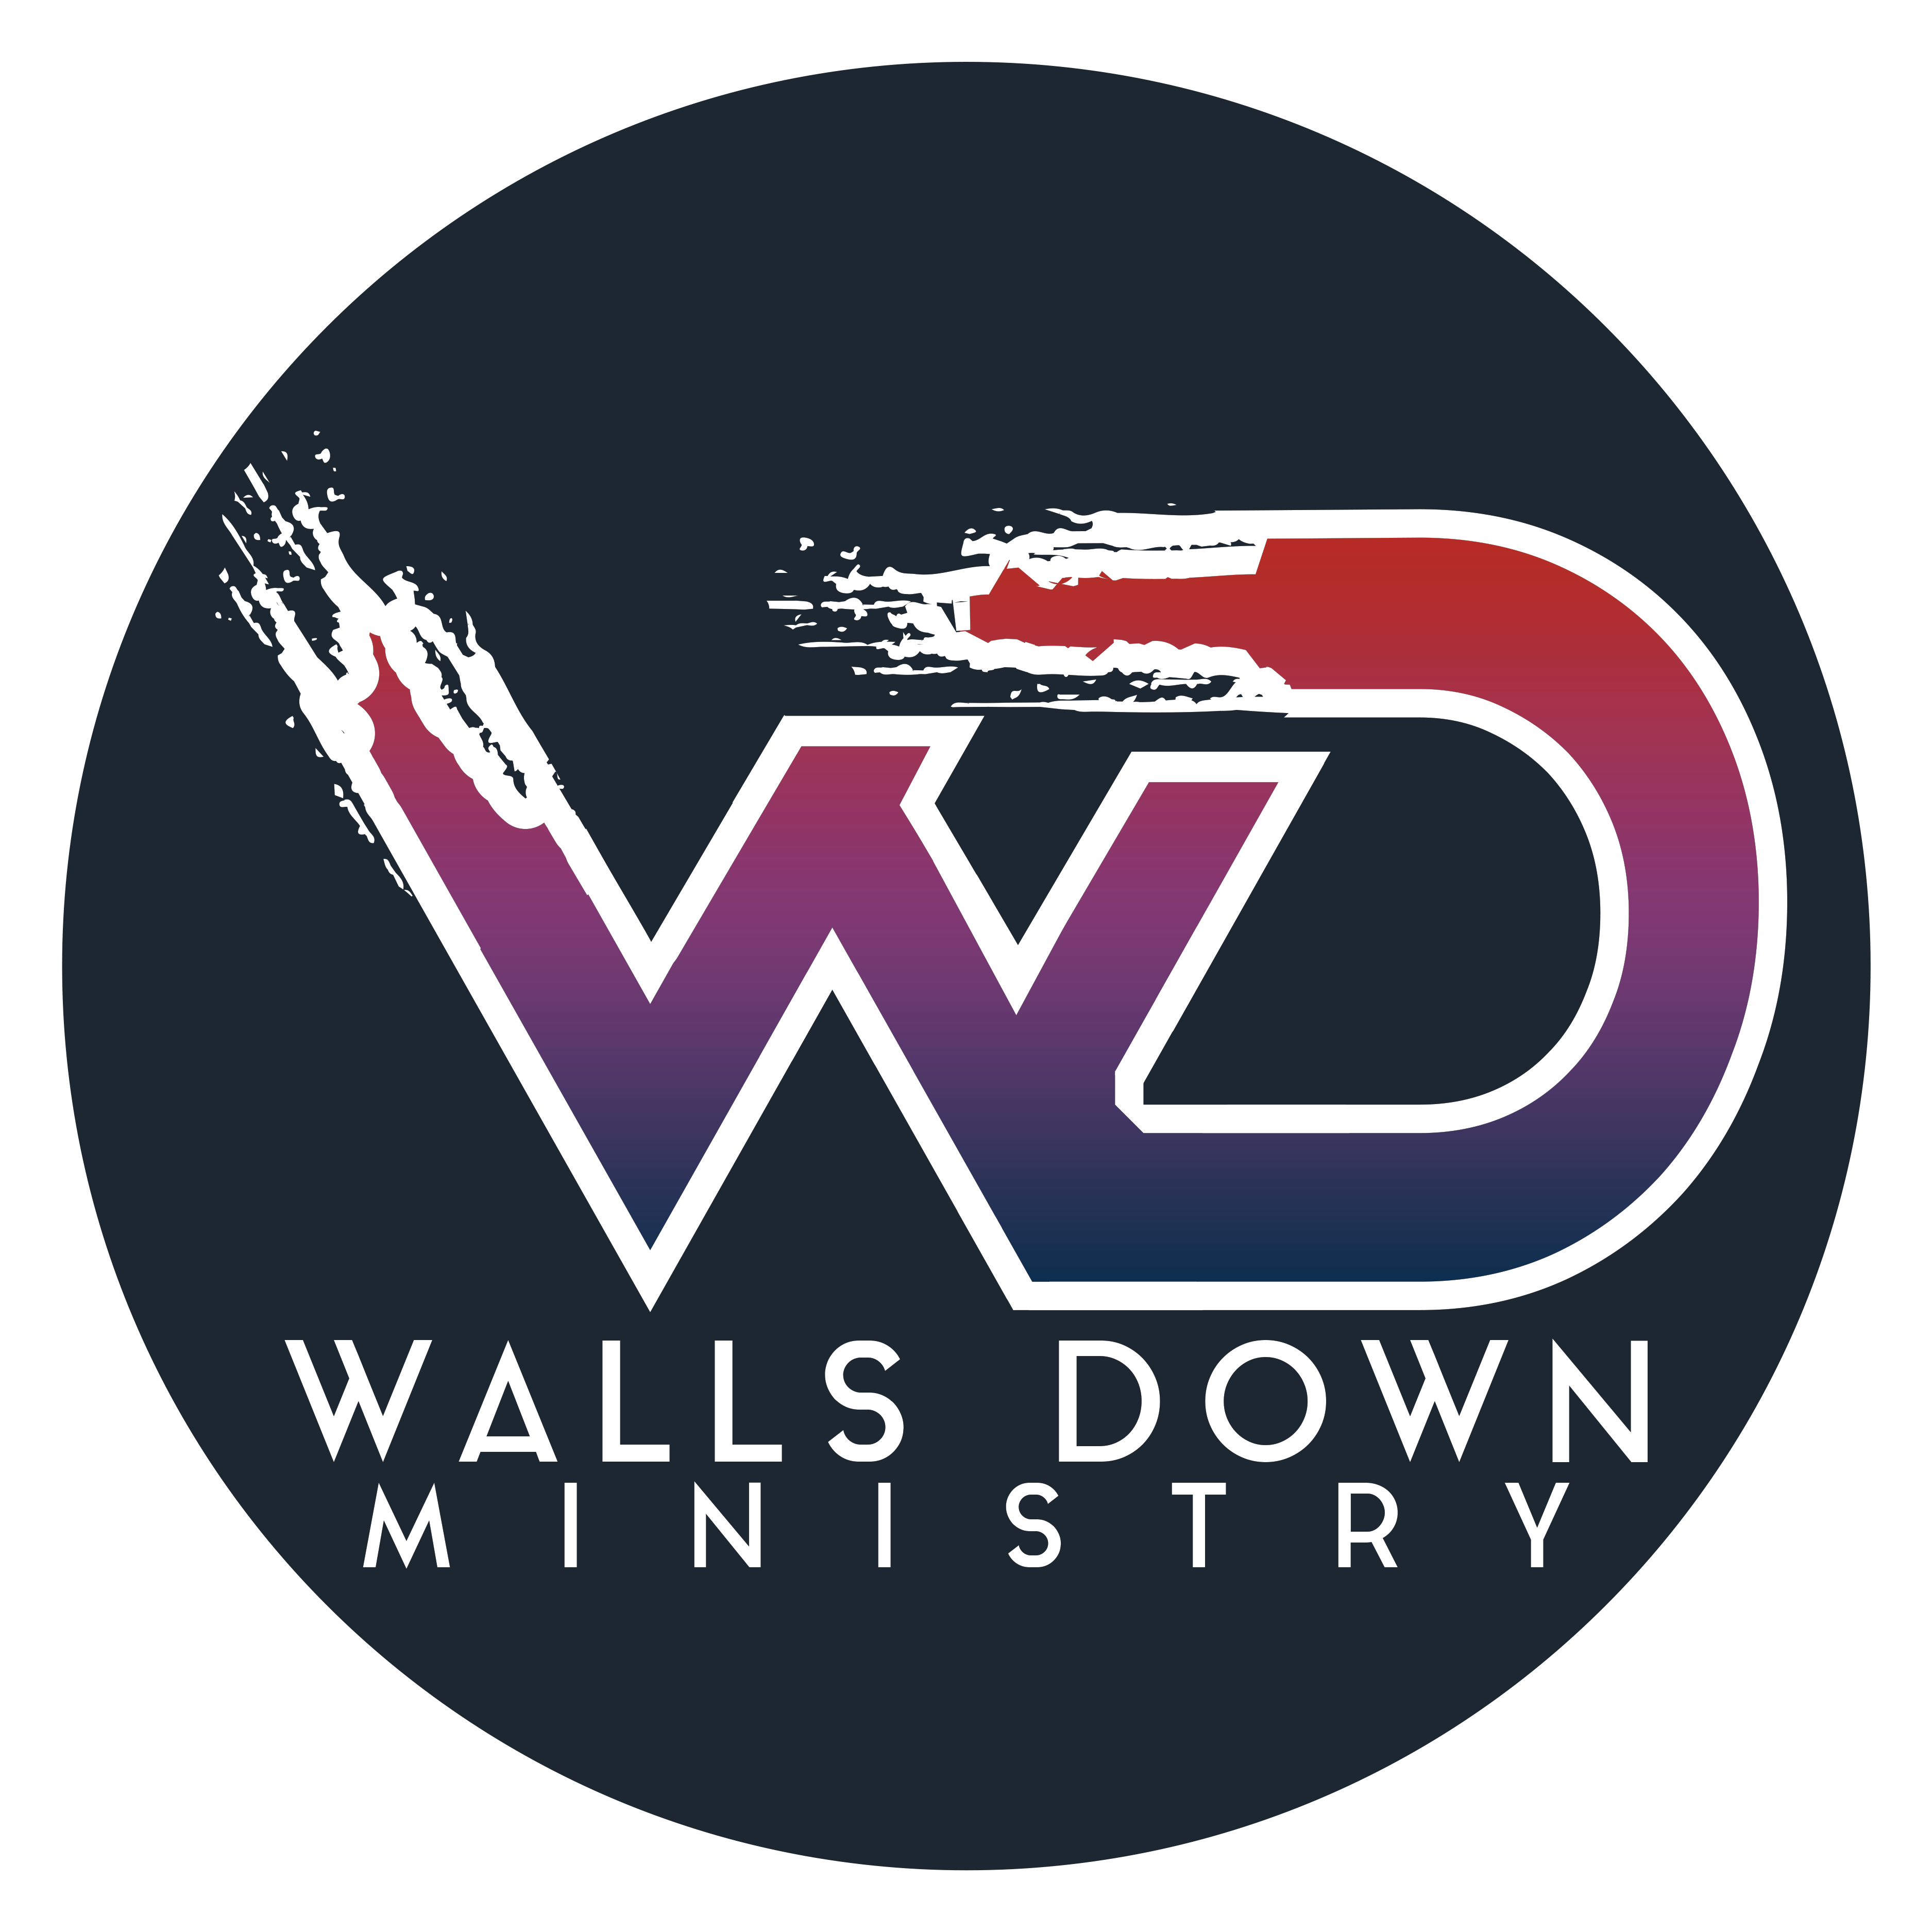 Walls Down Ministry logo